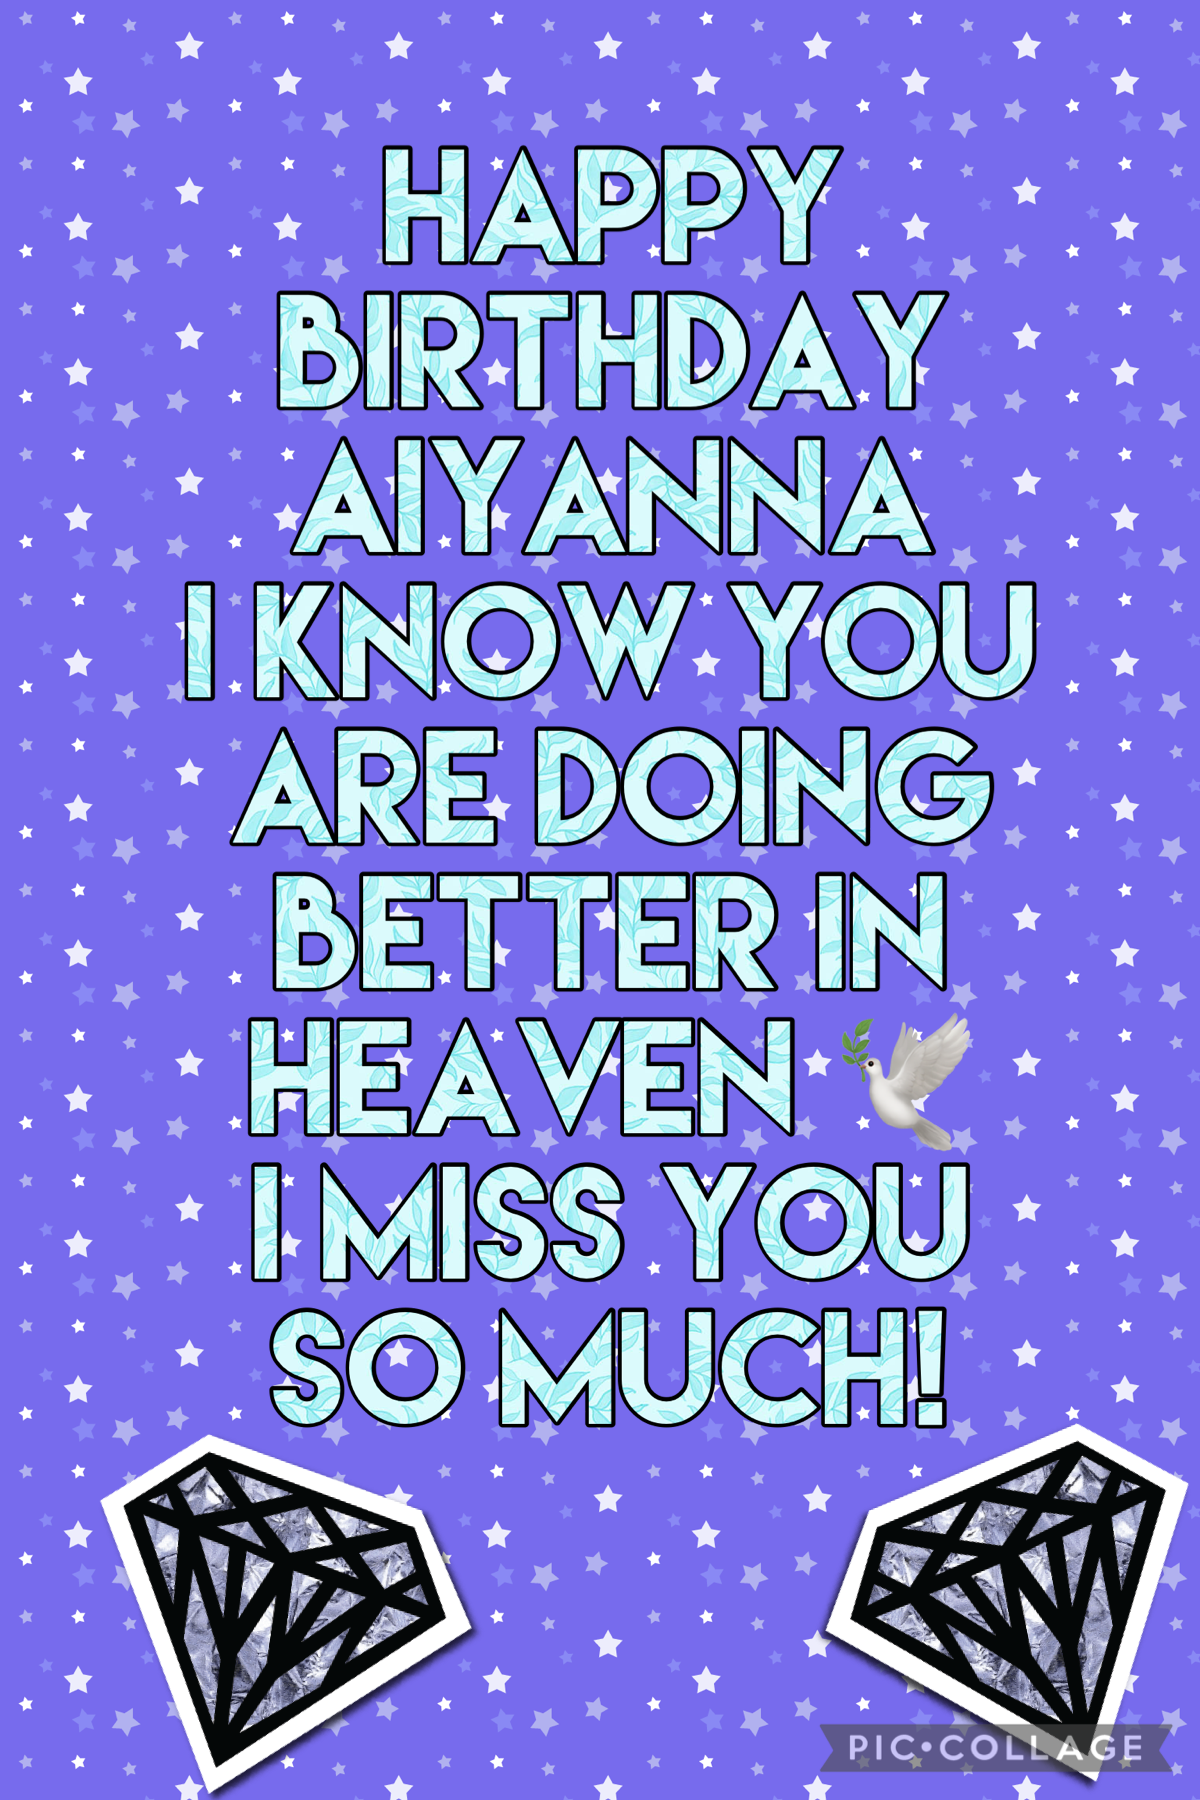 Happy birthday Aiyanna! Fly high